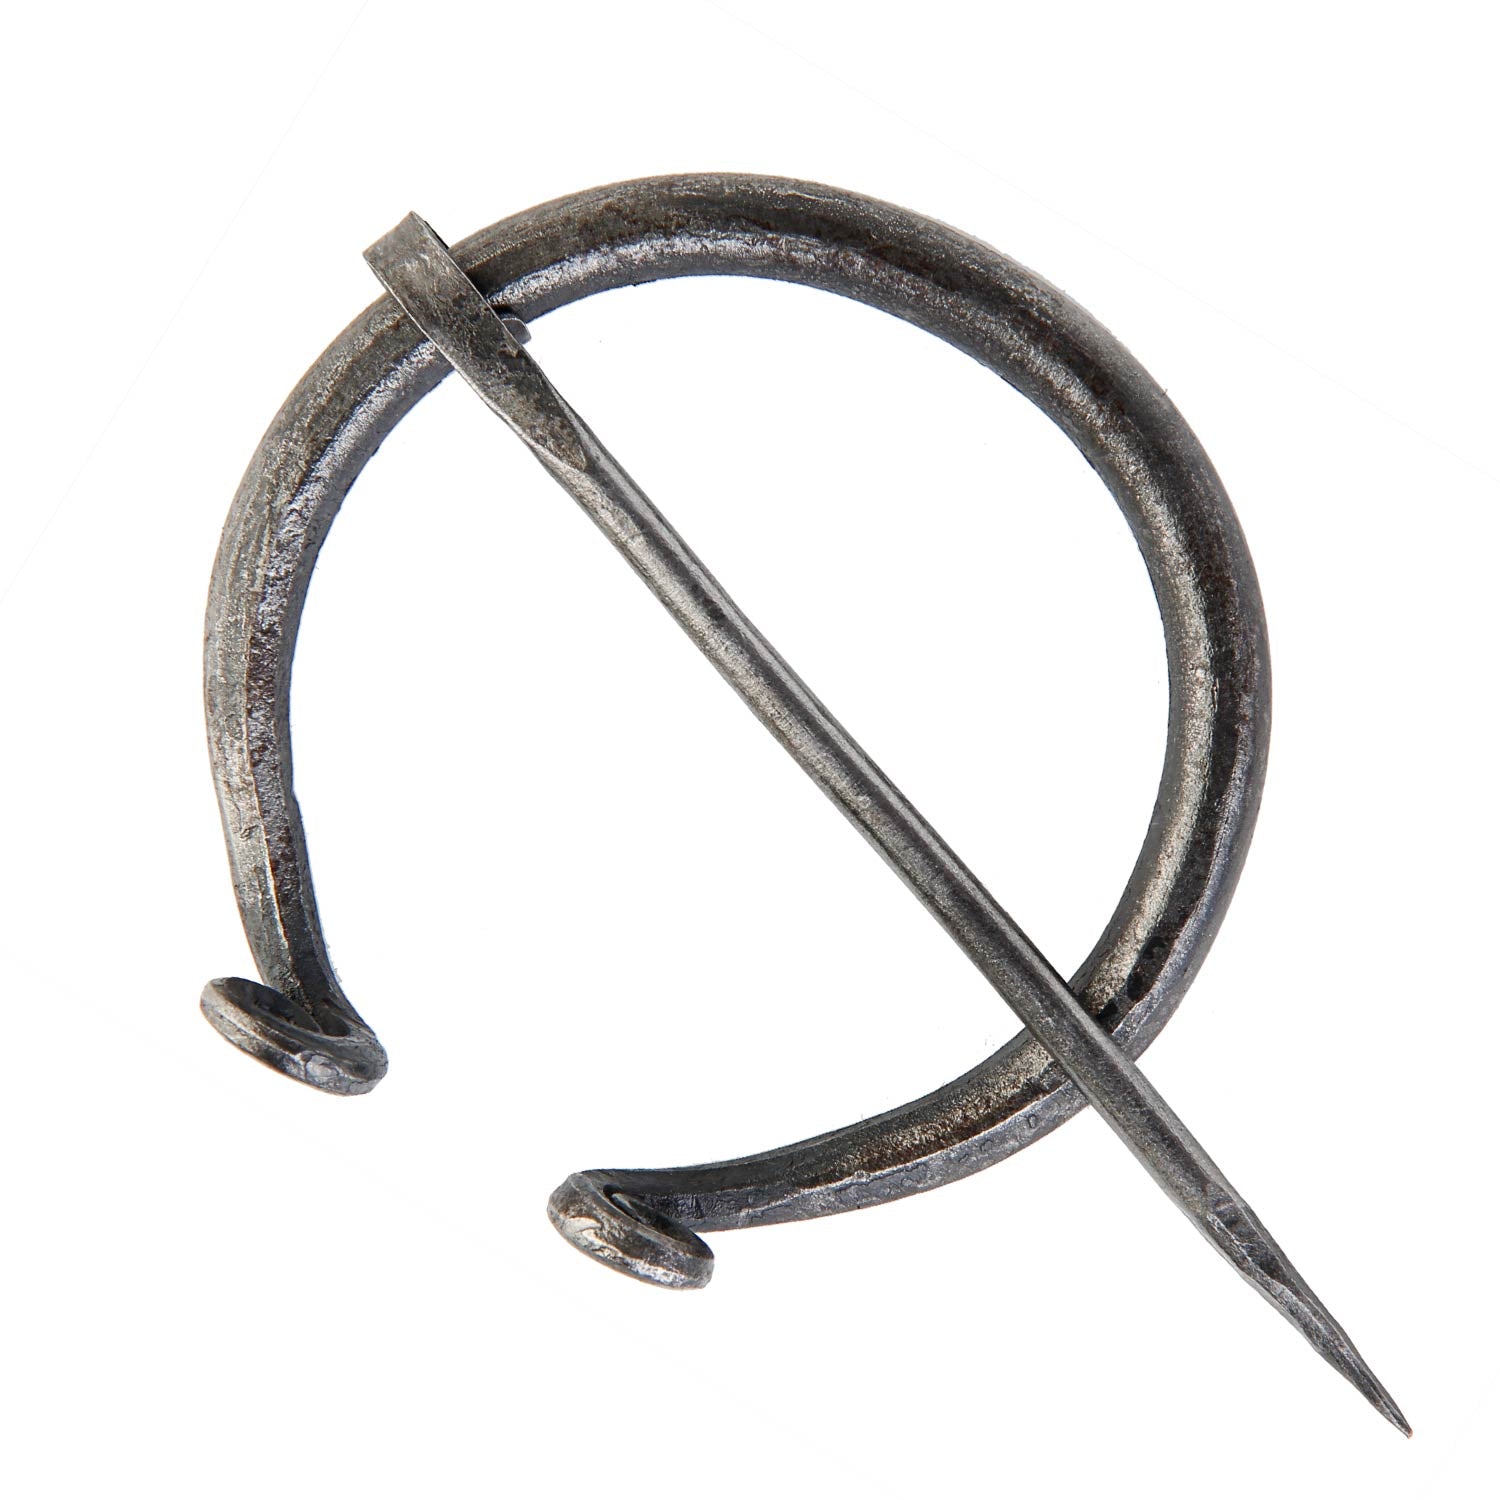 NAUTICALMART Medieval Twisted Cloak Pin Penannular Brooch